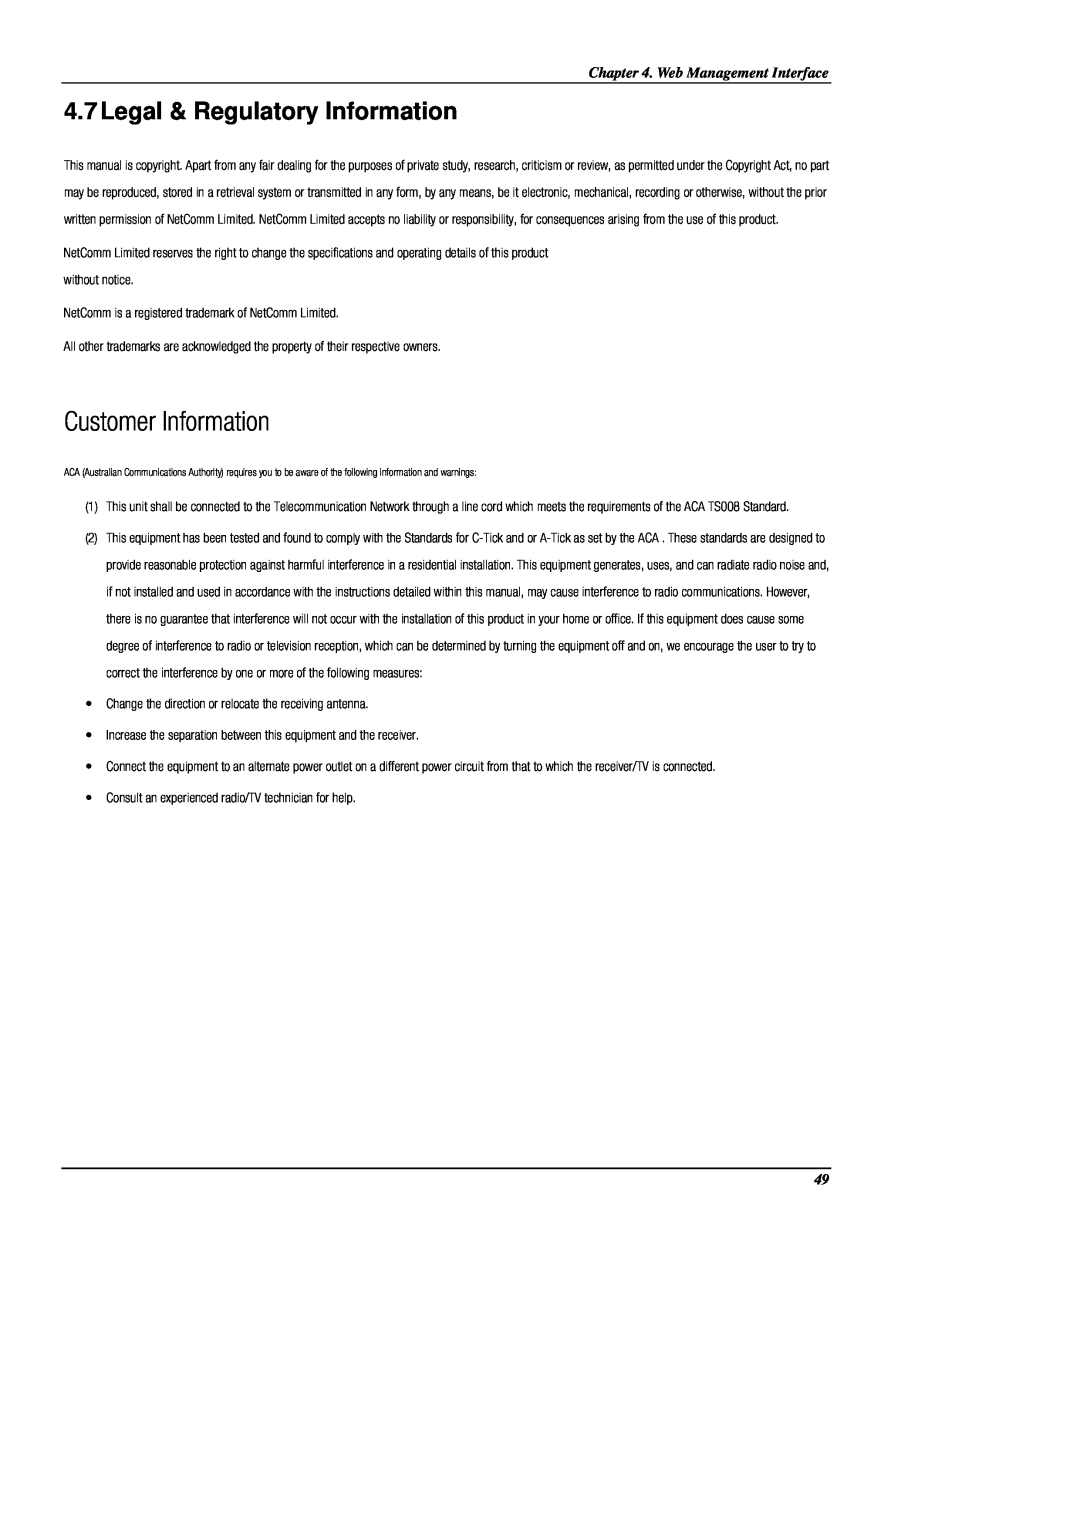 NetComm NP725 manual 4.7Legal & Regulatory Information, Customer Information, Web Management Interface 